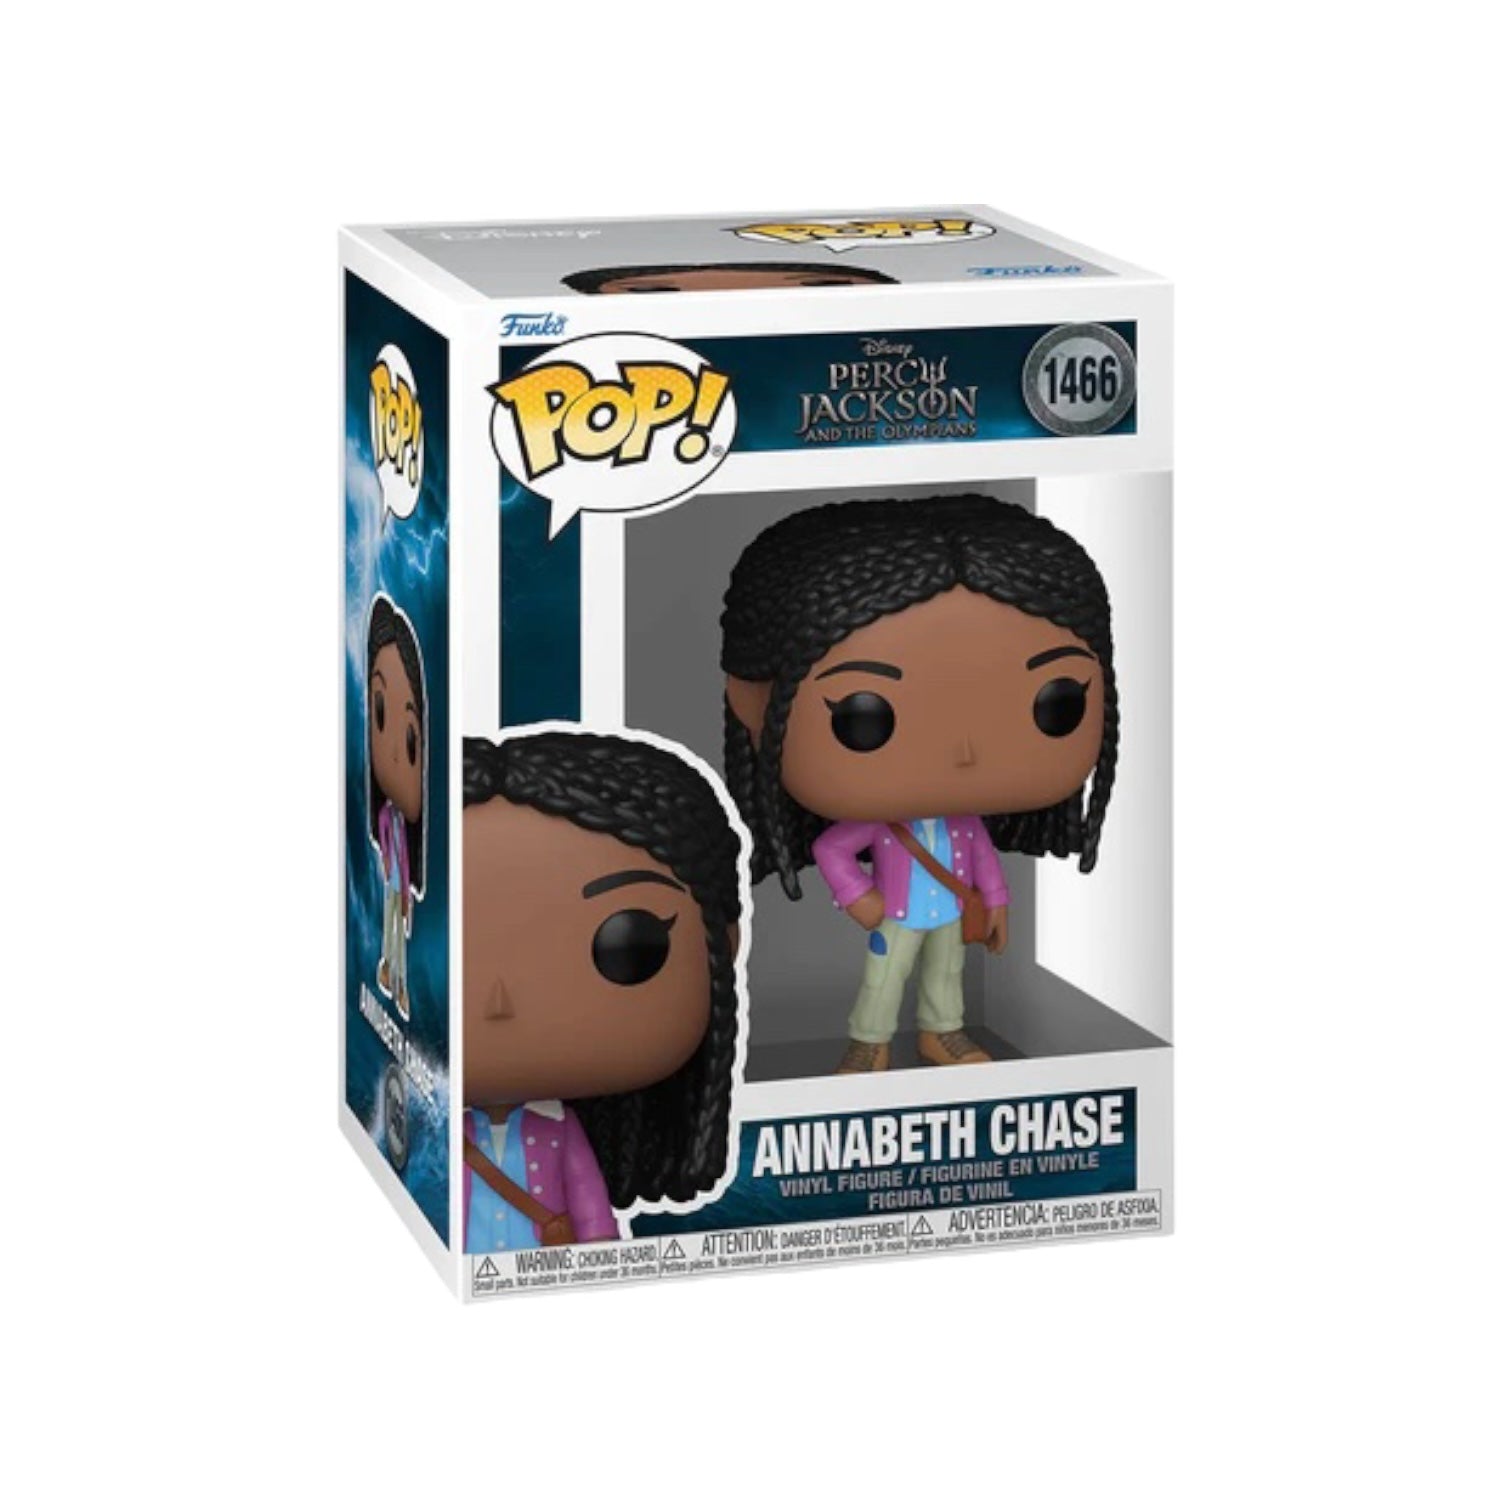 Annabeth Chase #1466 Funko Pop! Percy Jackson & The Olympians - PREORDER